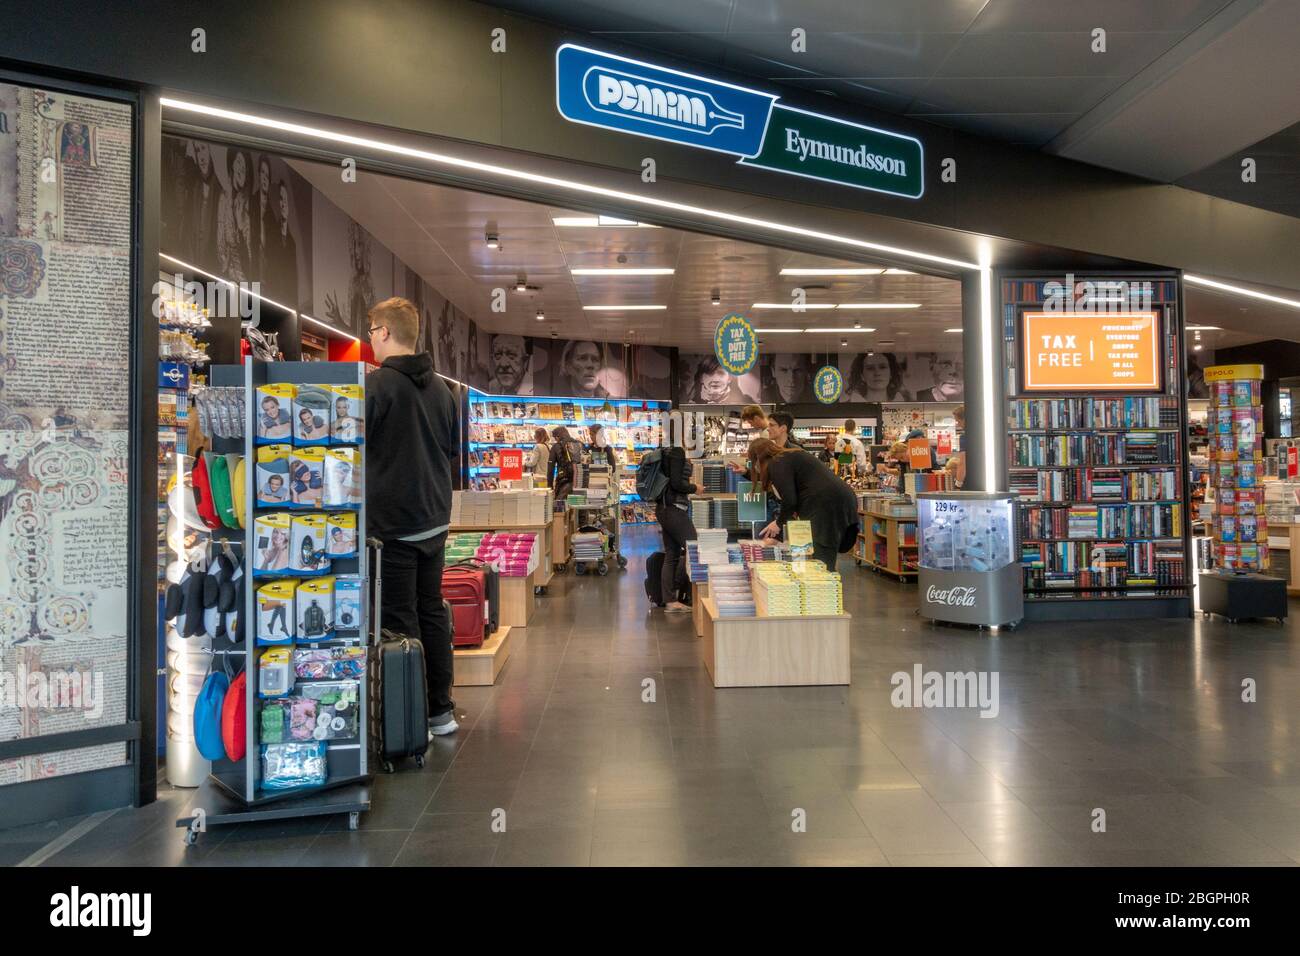 The Penninn Eymundsson shop in Keflavík International Airport, Reykjavik, Iceland. Stock Photo